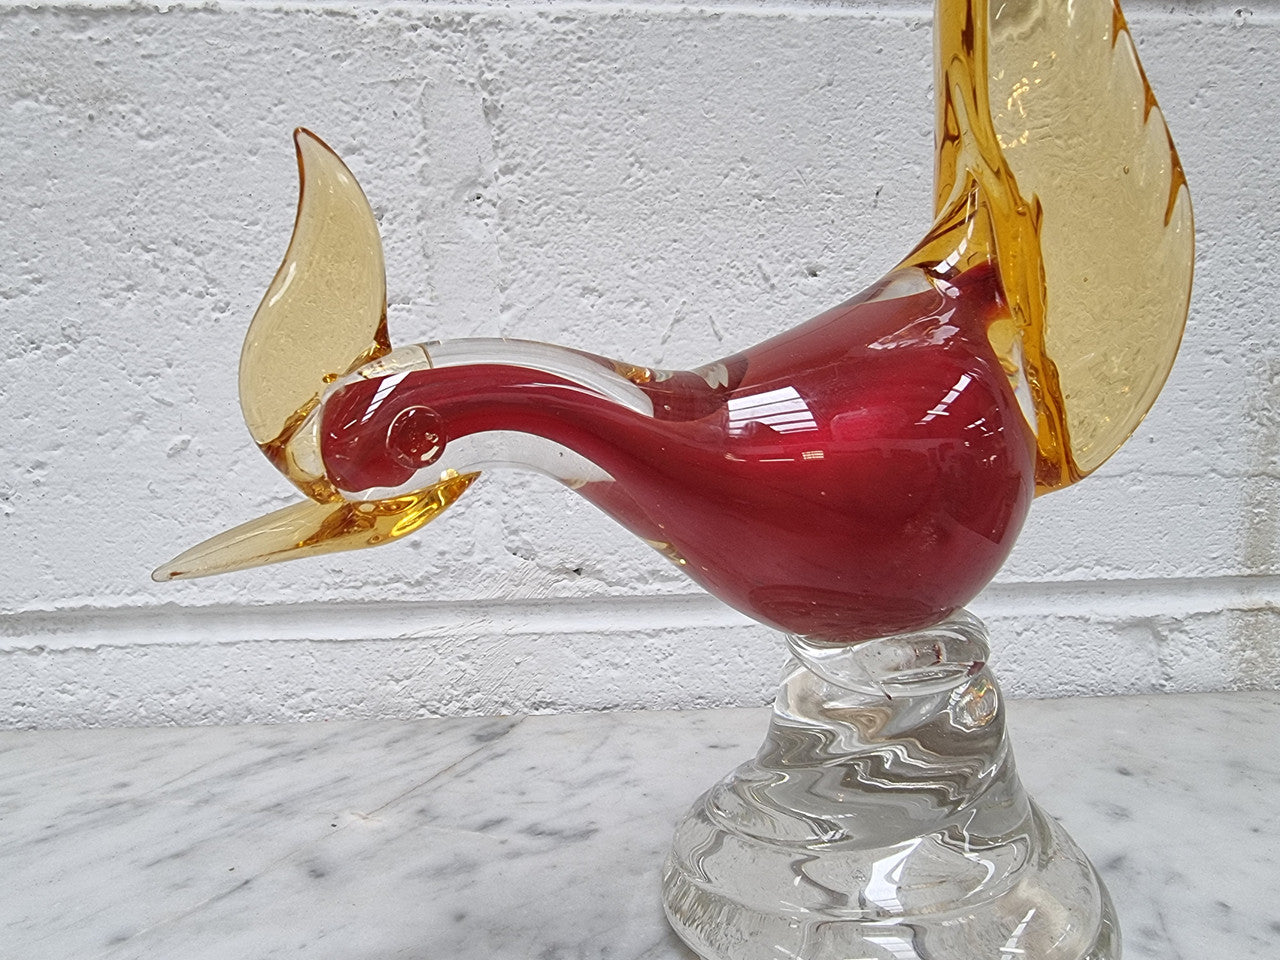 Beautiful Murano glass bird with its original sticker underneath in good original condition.